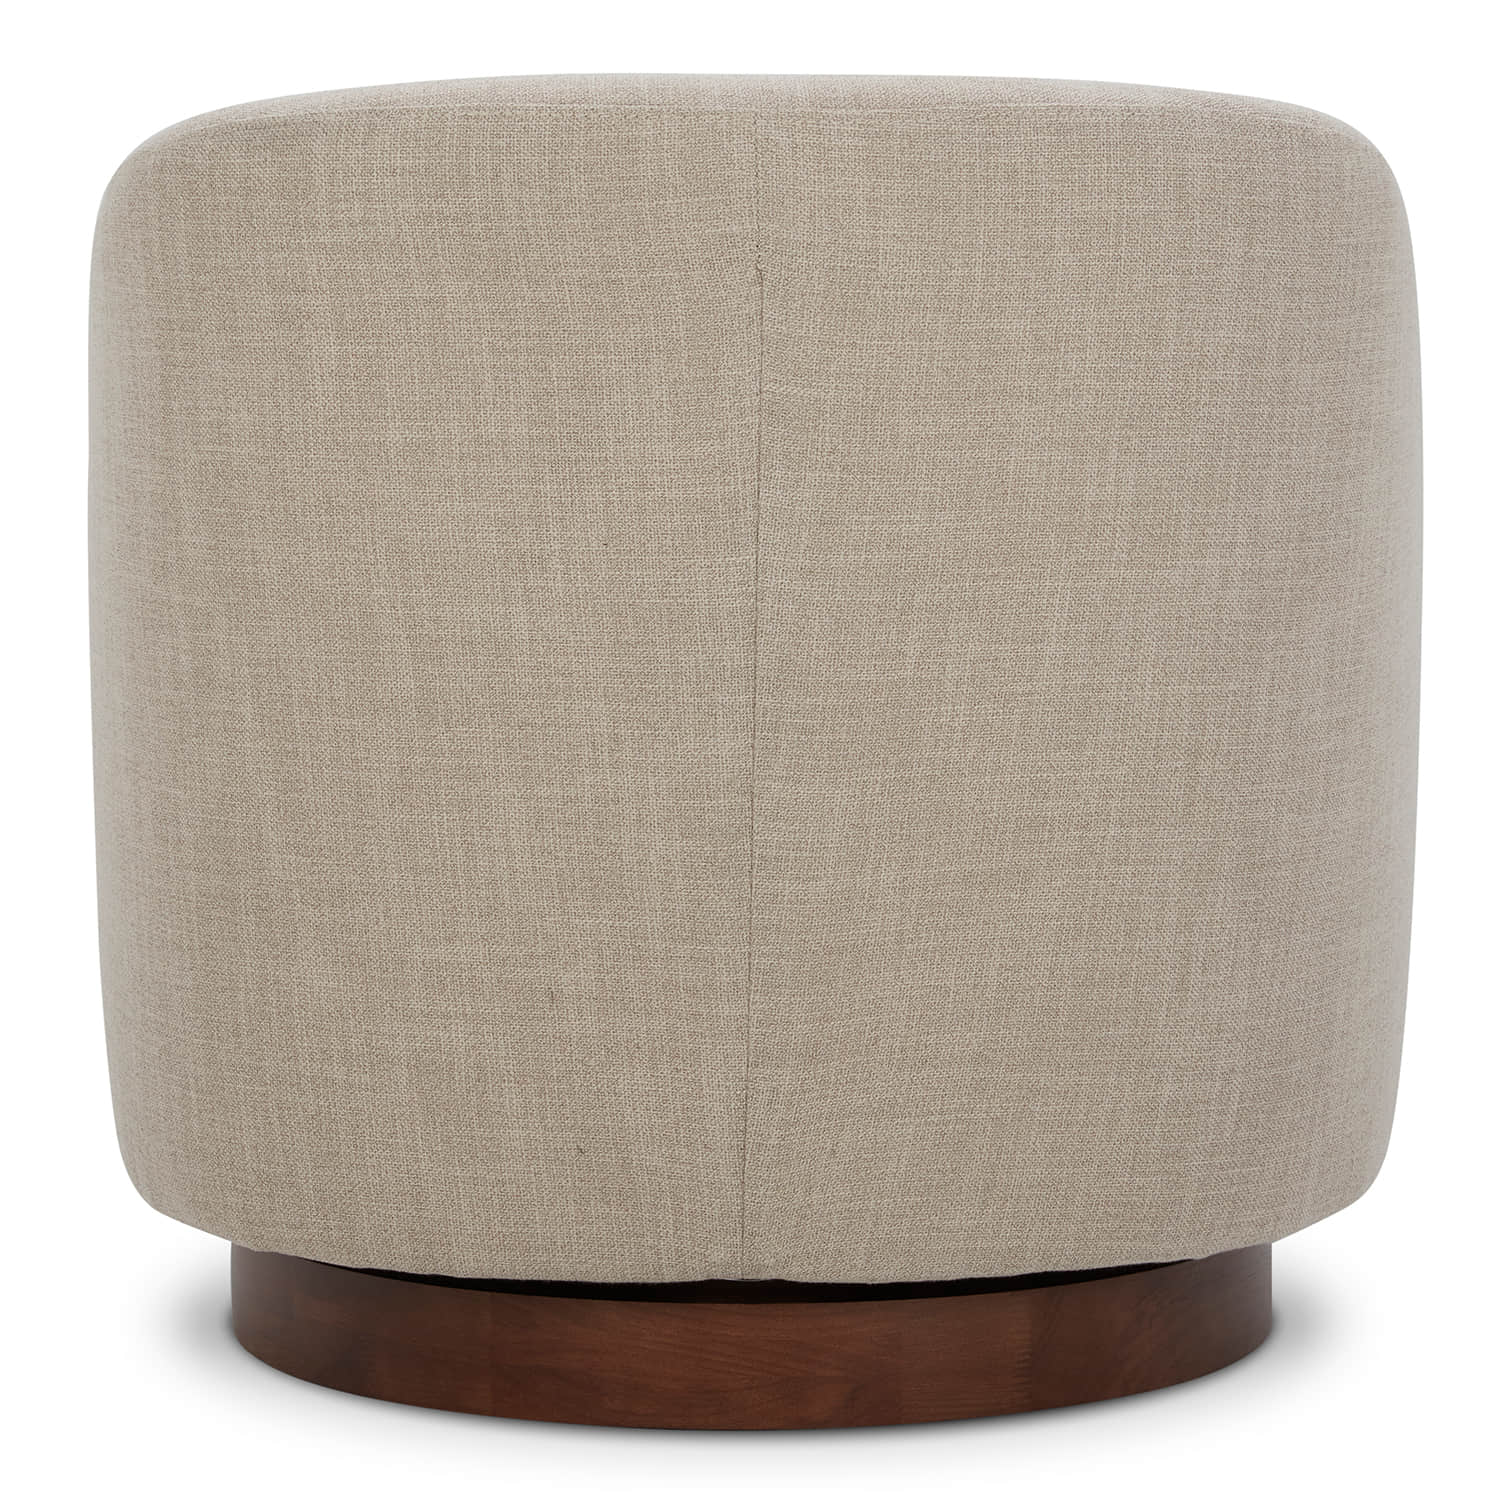 CHITA LIVING-Wren Modern Swivel Accent Chair-Accent Chair-Fabric-Flax Beige-